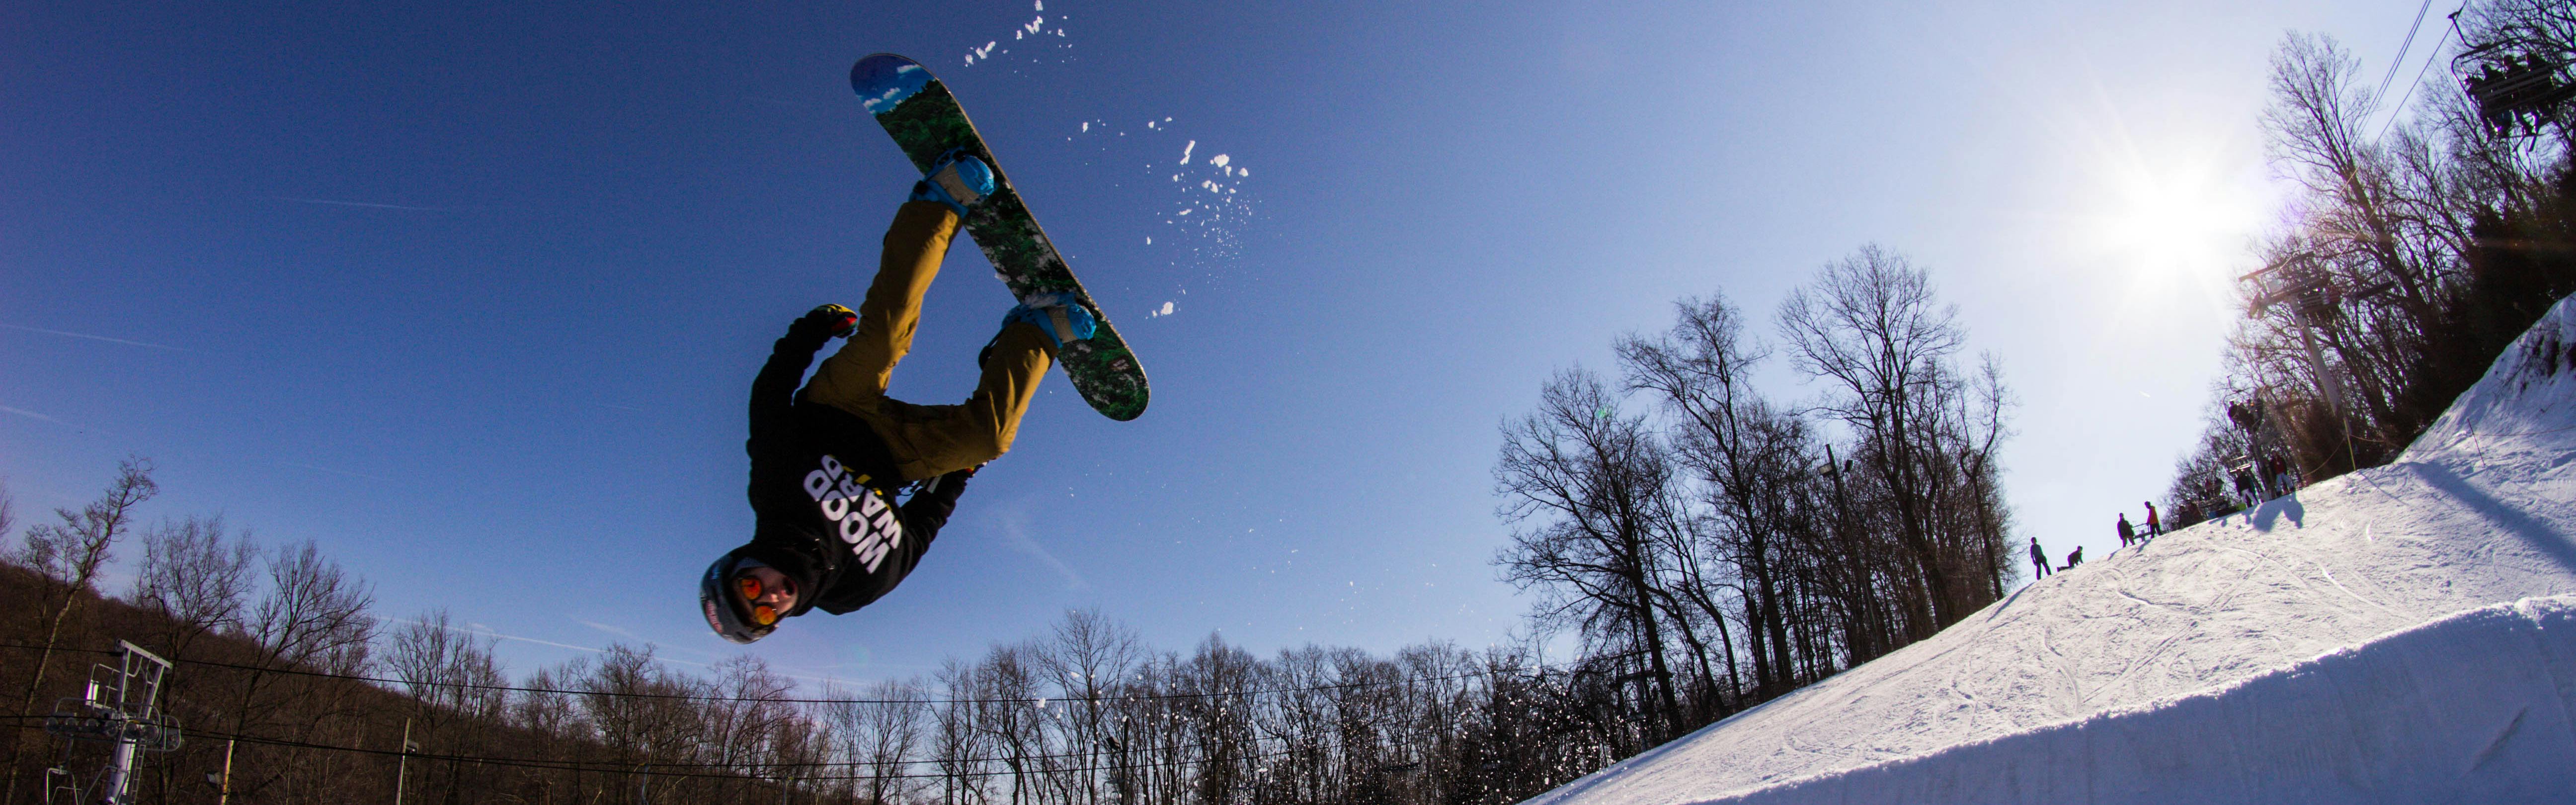 A snowboarder in a black sweatshirt executes a flip